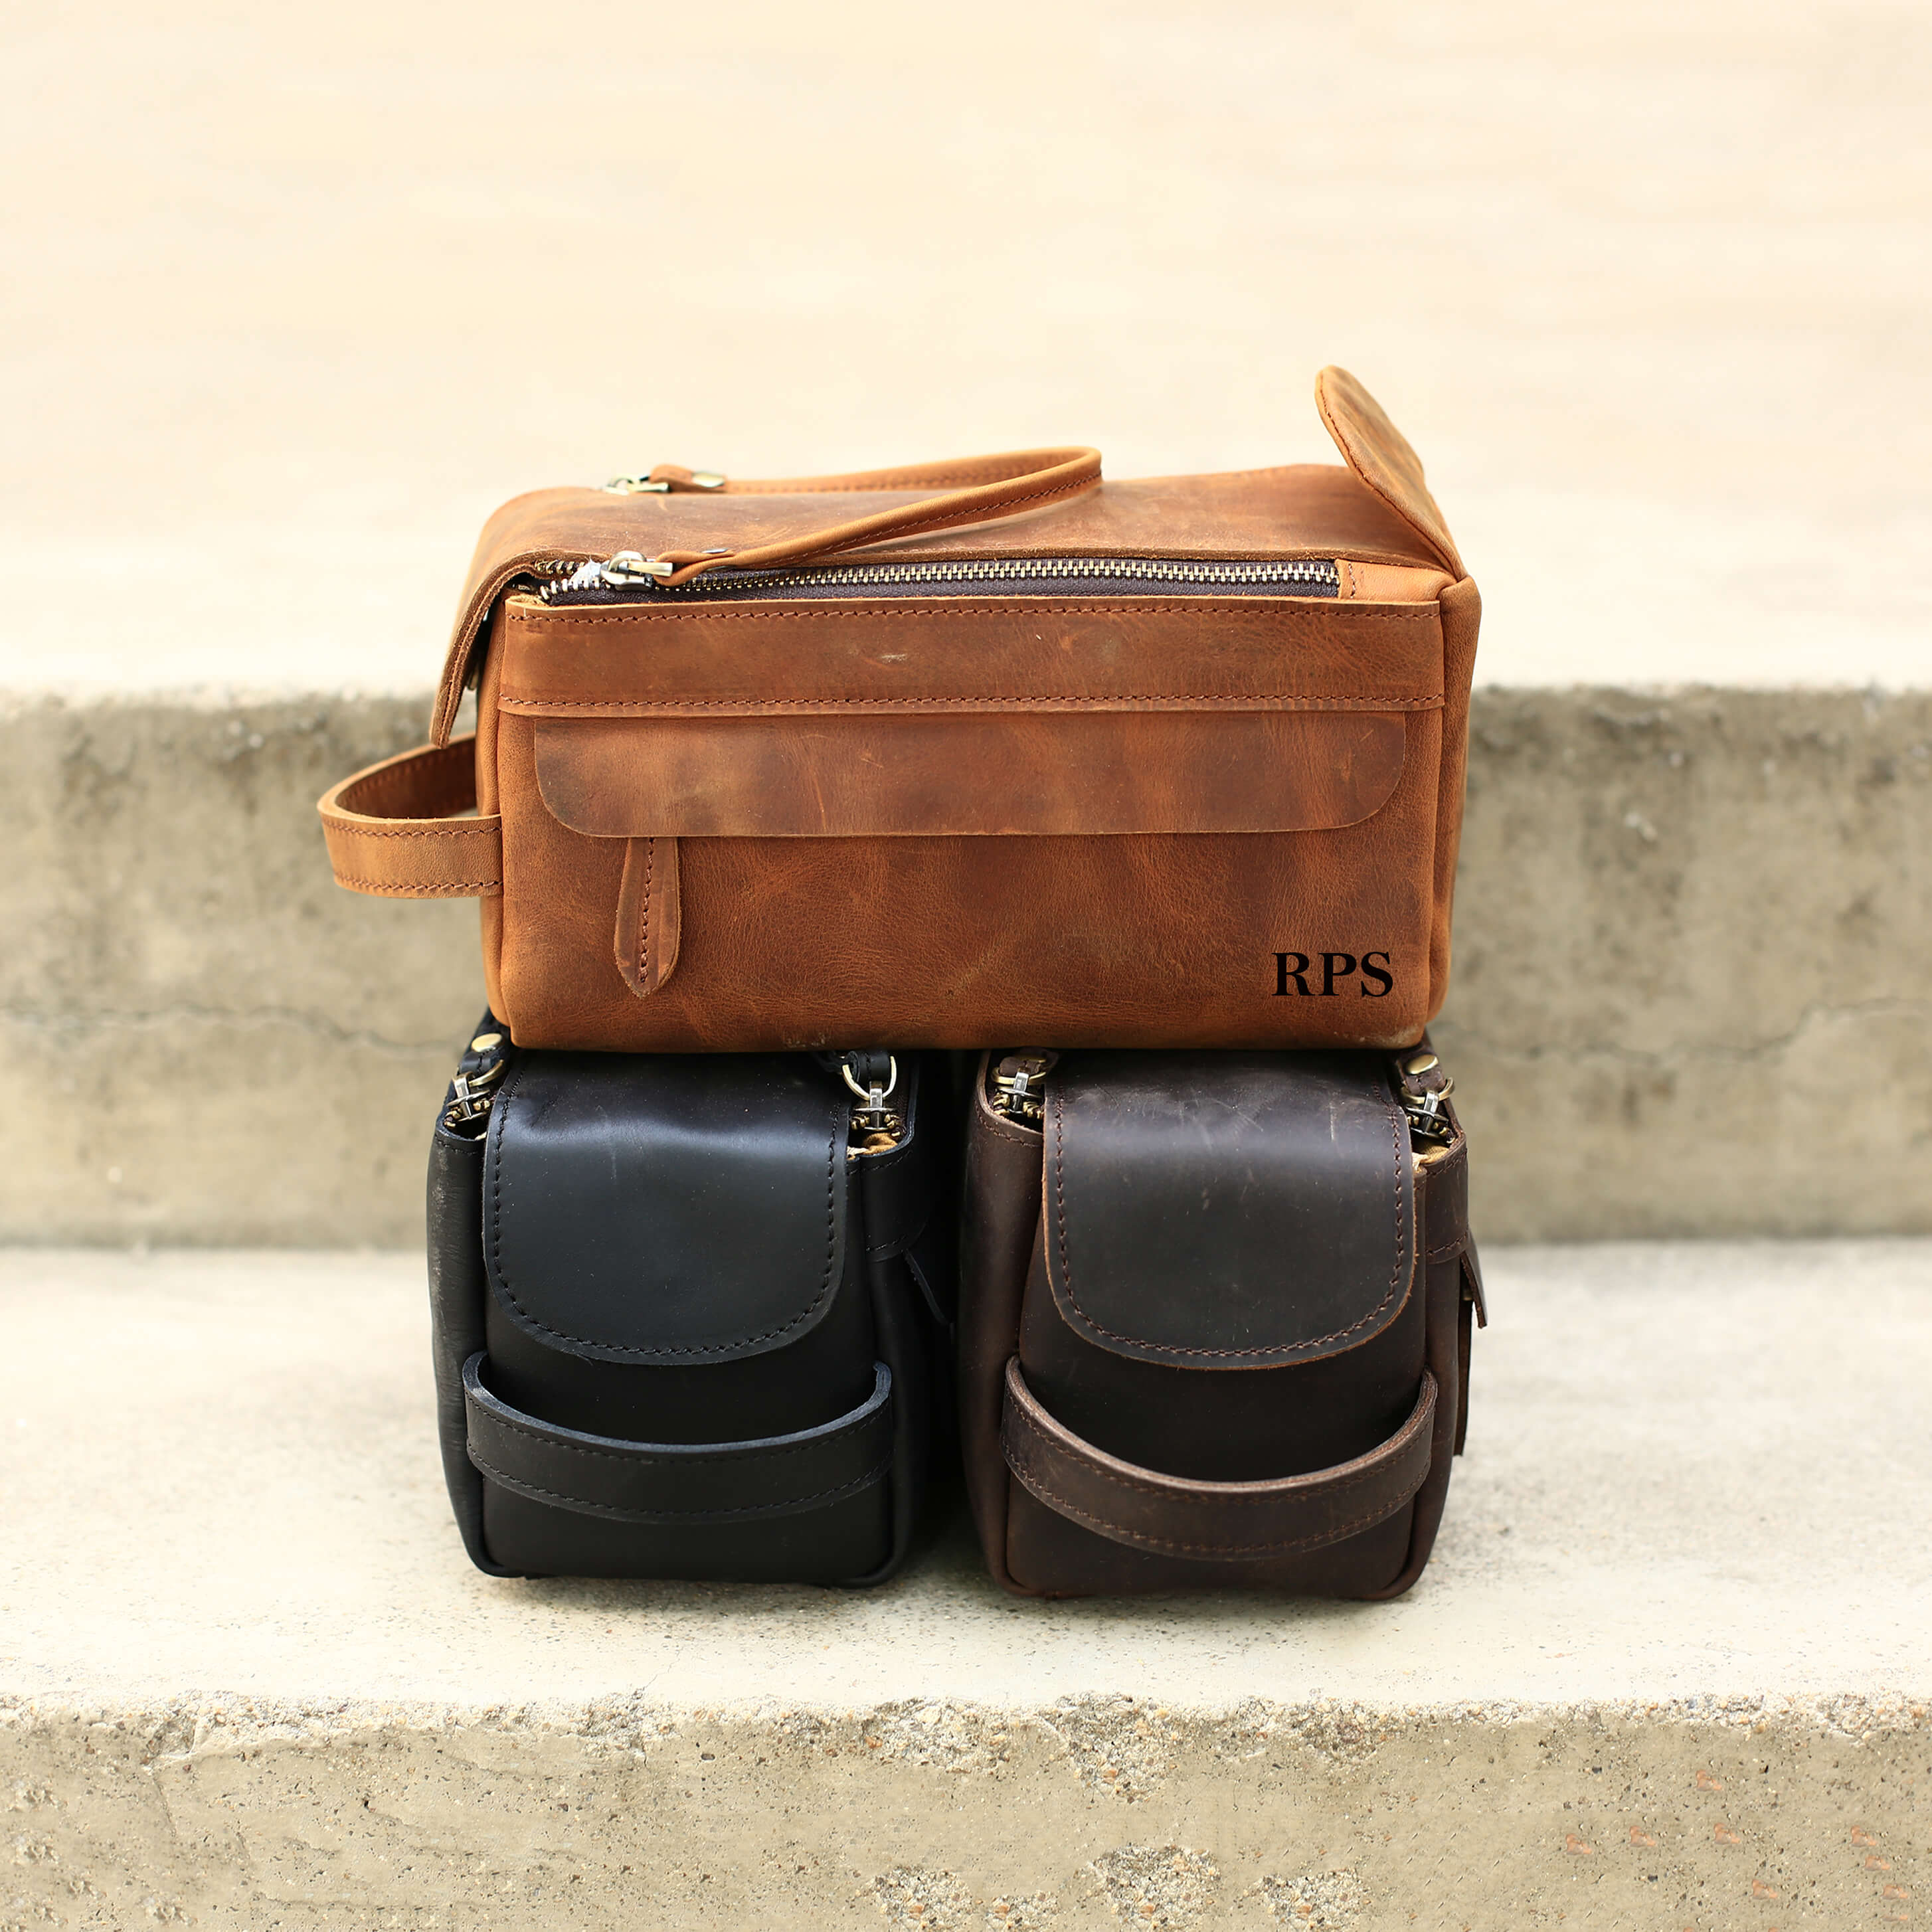 Travel Leather Dopp Kit, Brown Buffalo Leather